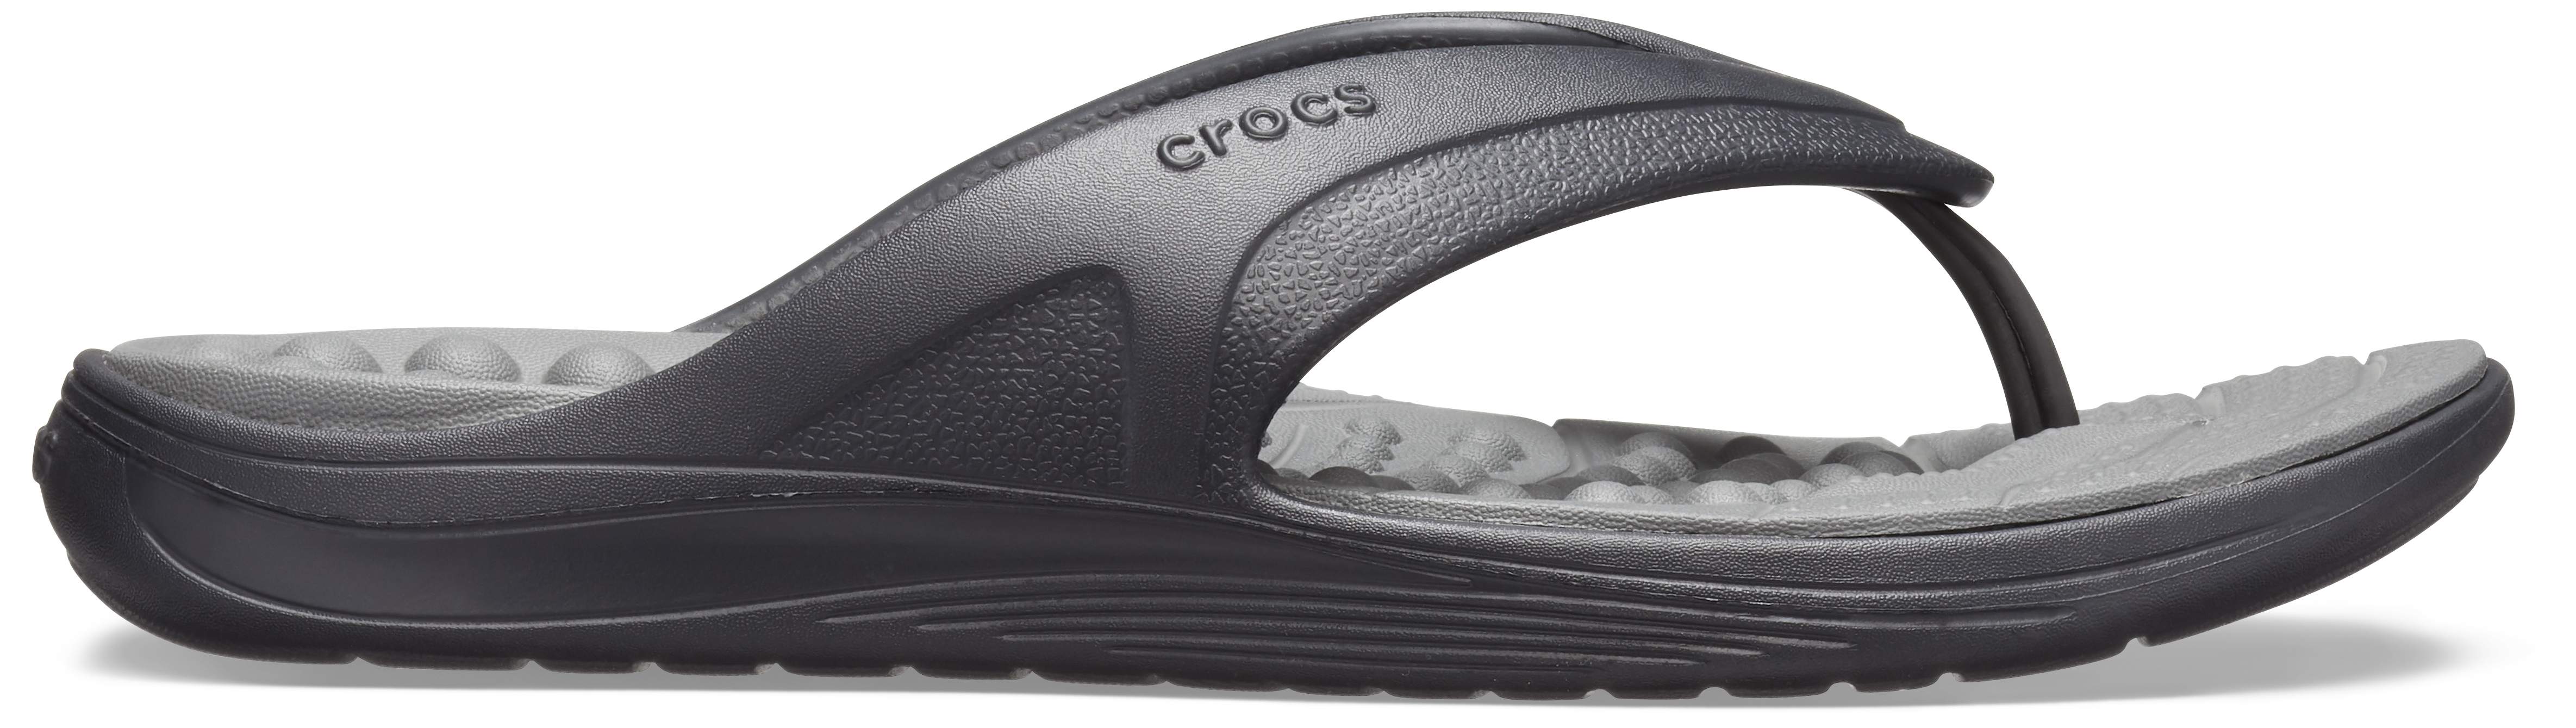 crocs reviva slide